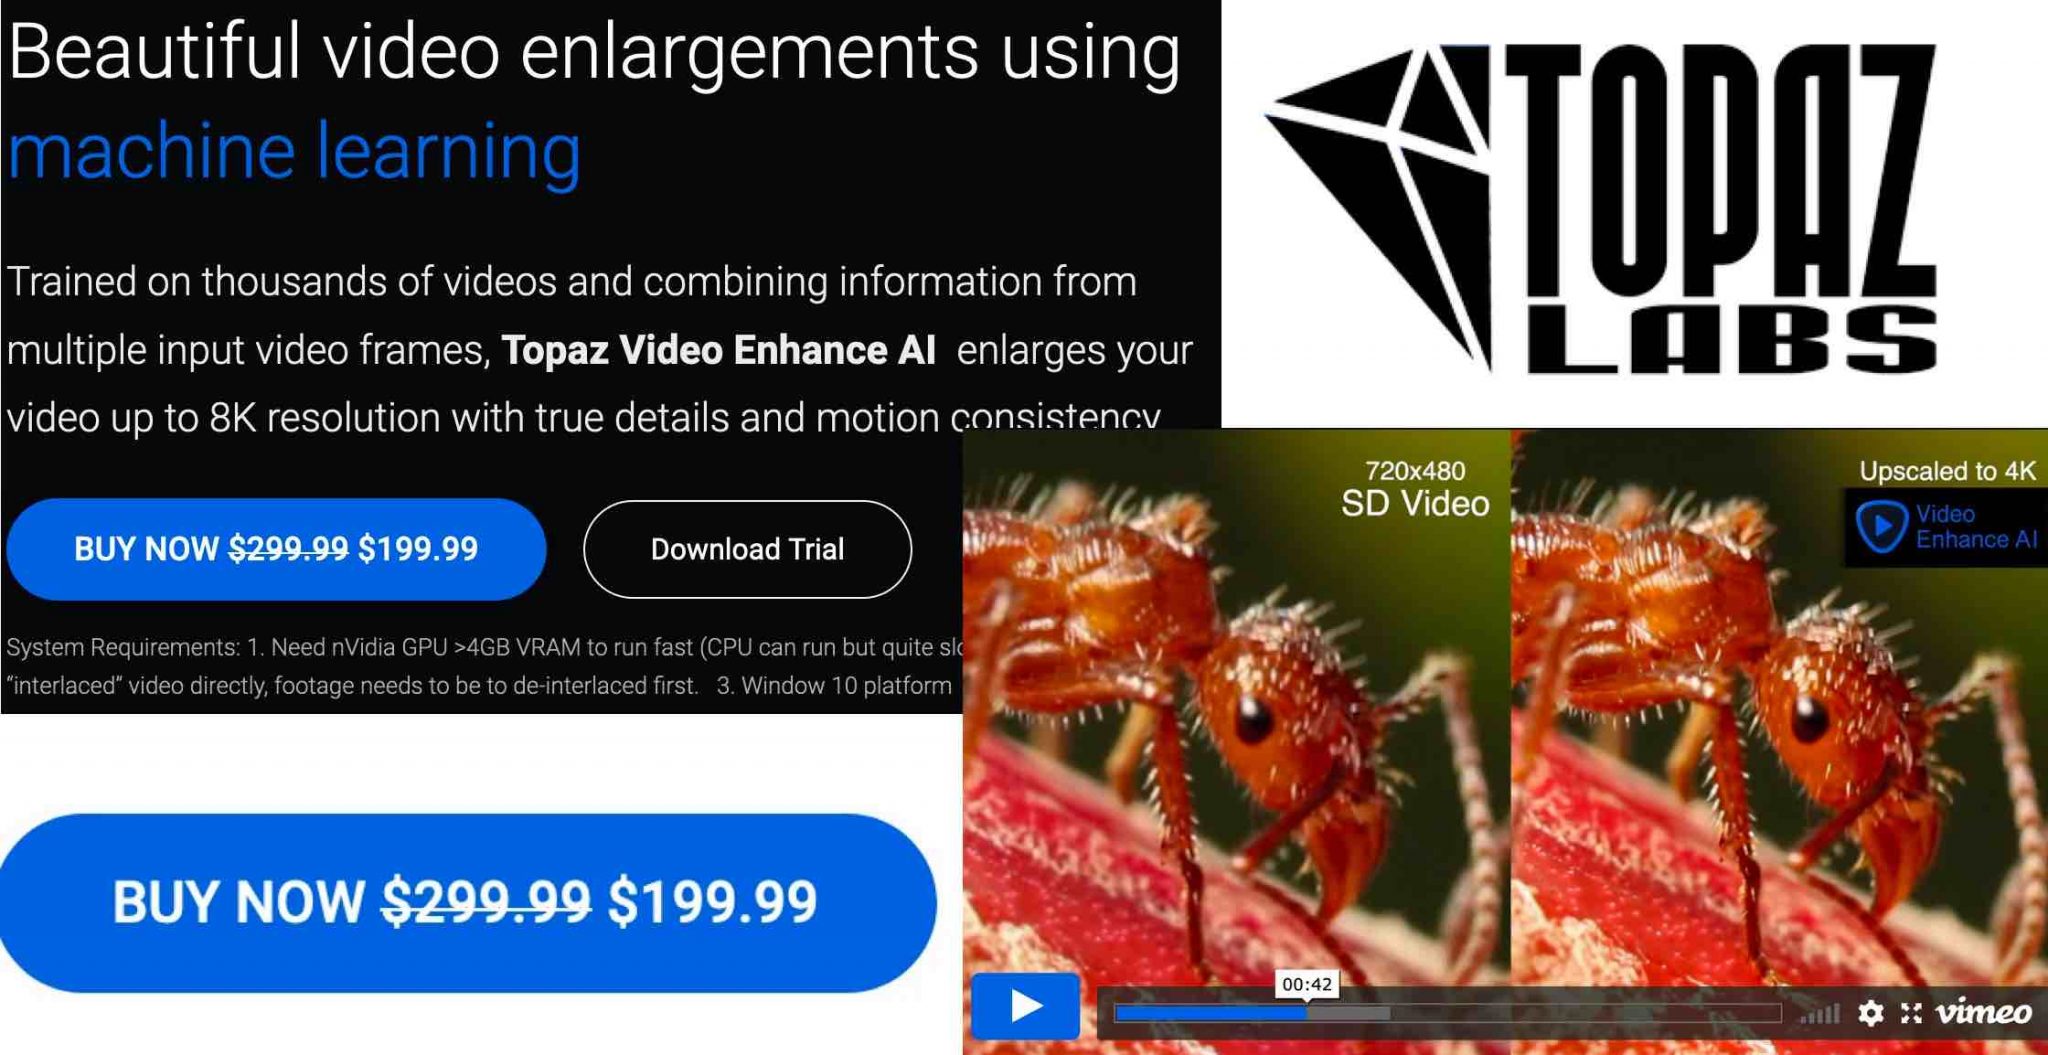 Topaz Video Enhance AI 3.3.8 download the last version for windows